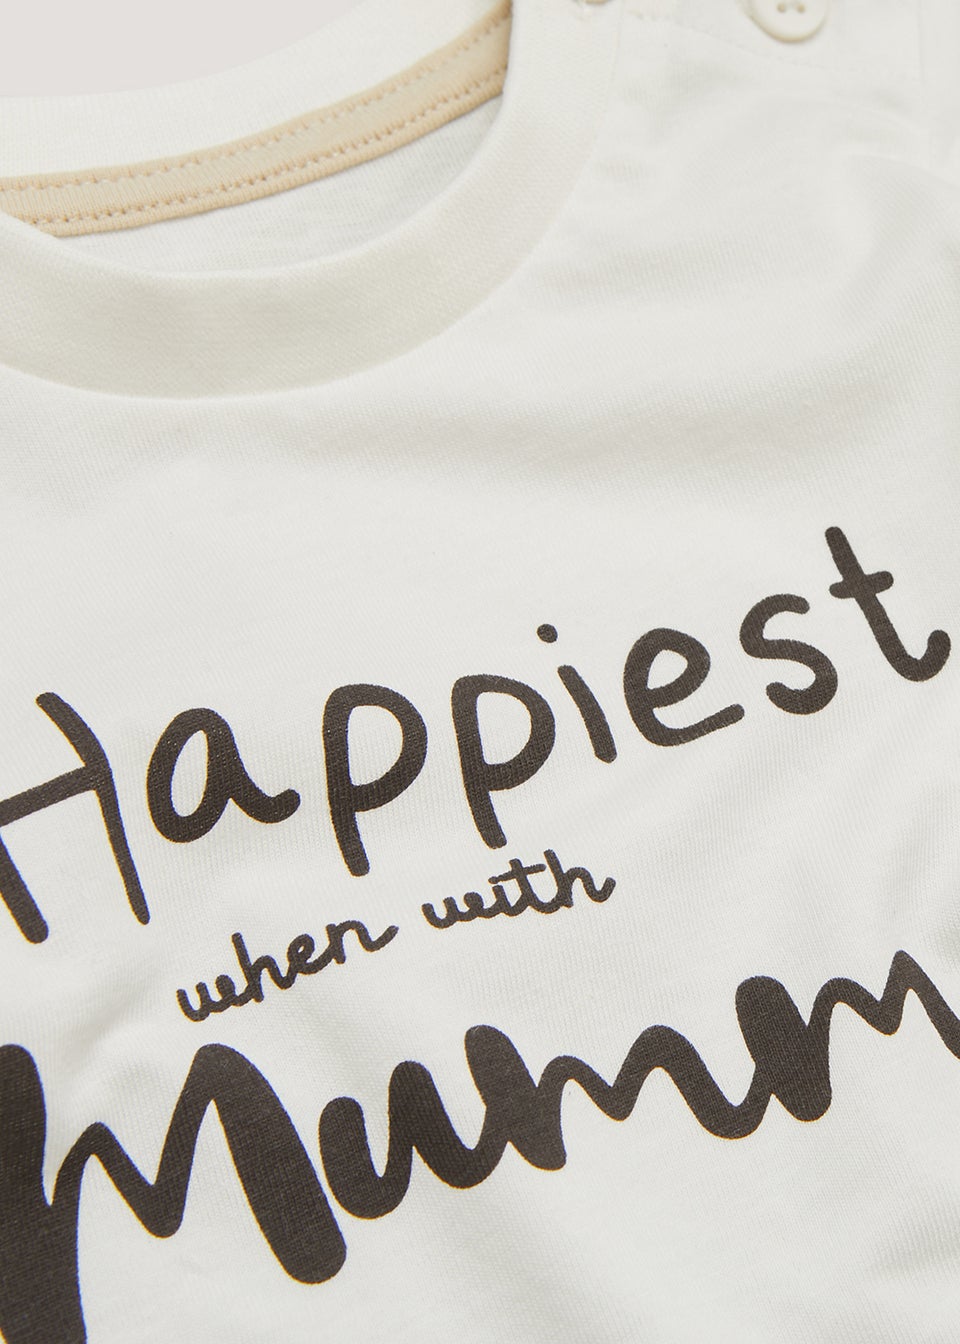 Baby Cream Mummy Slogan T-Shirt (Newborn-23mths)